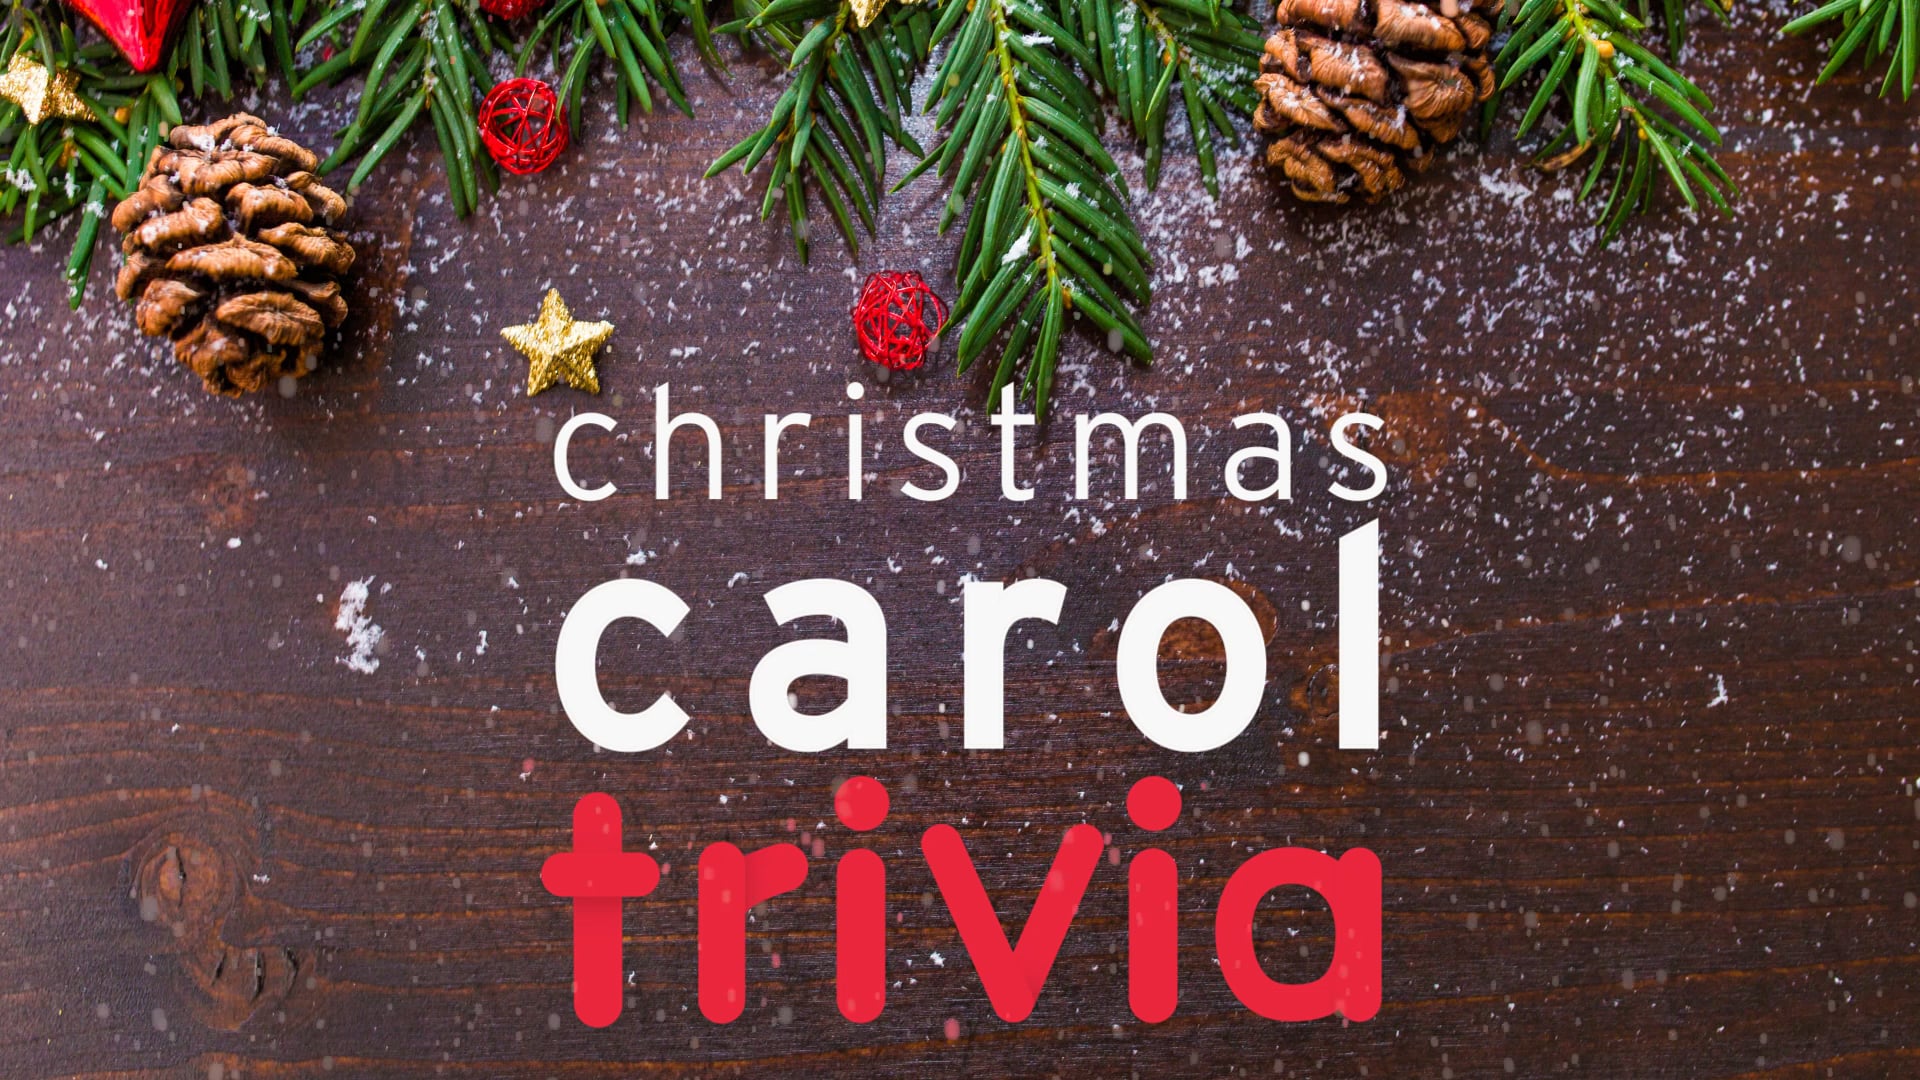 The Ridge's Christmas Carol Challenge